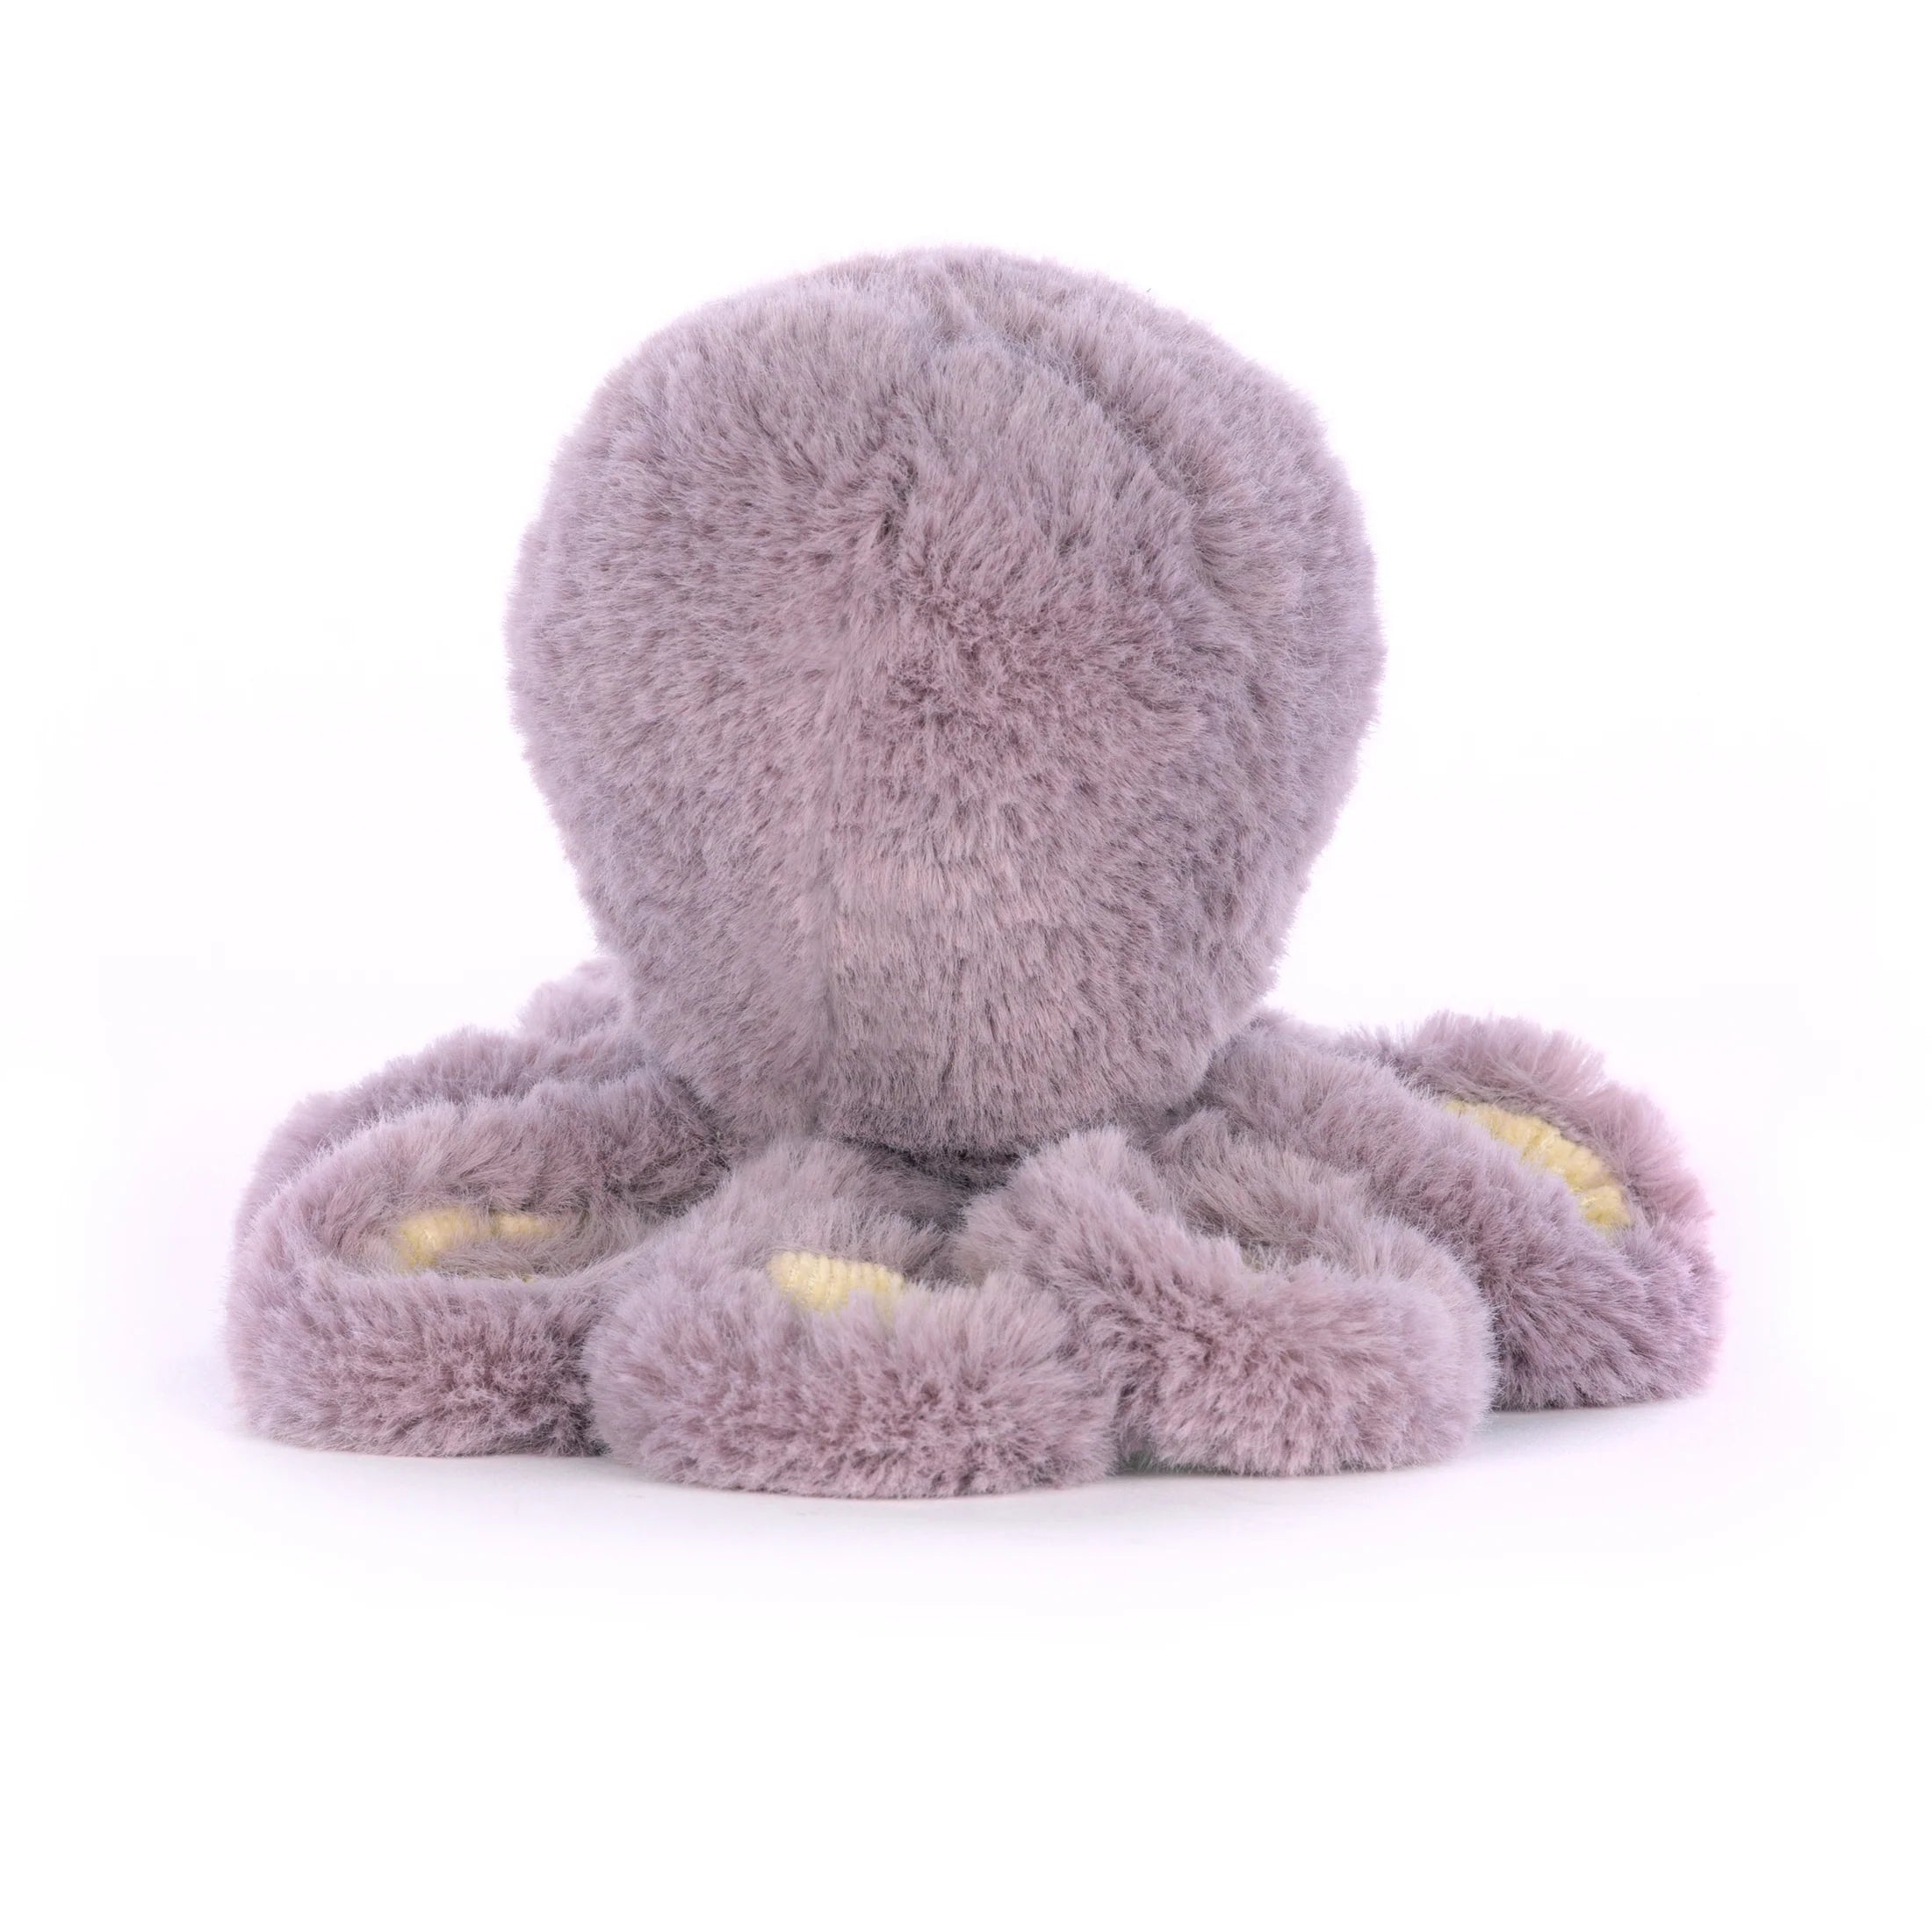 Maya Octopus Baby by Jellycat #AL4OC